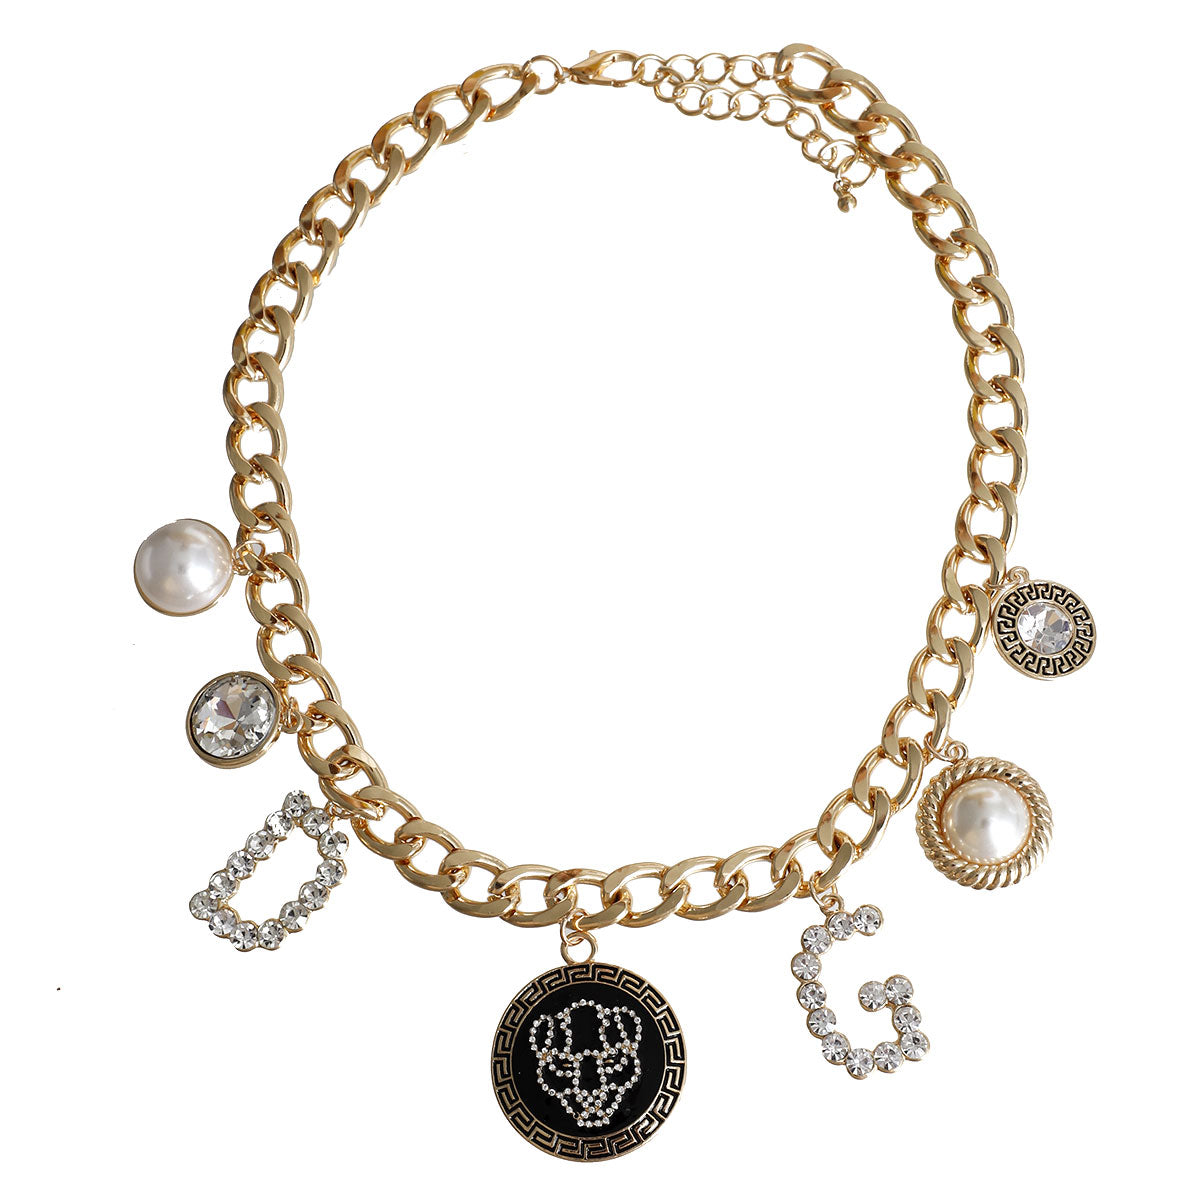 Designer Gold Chain Charm Necklace